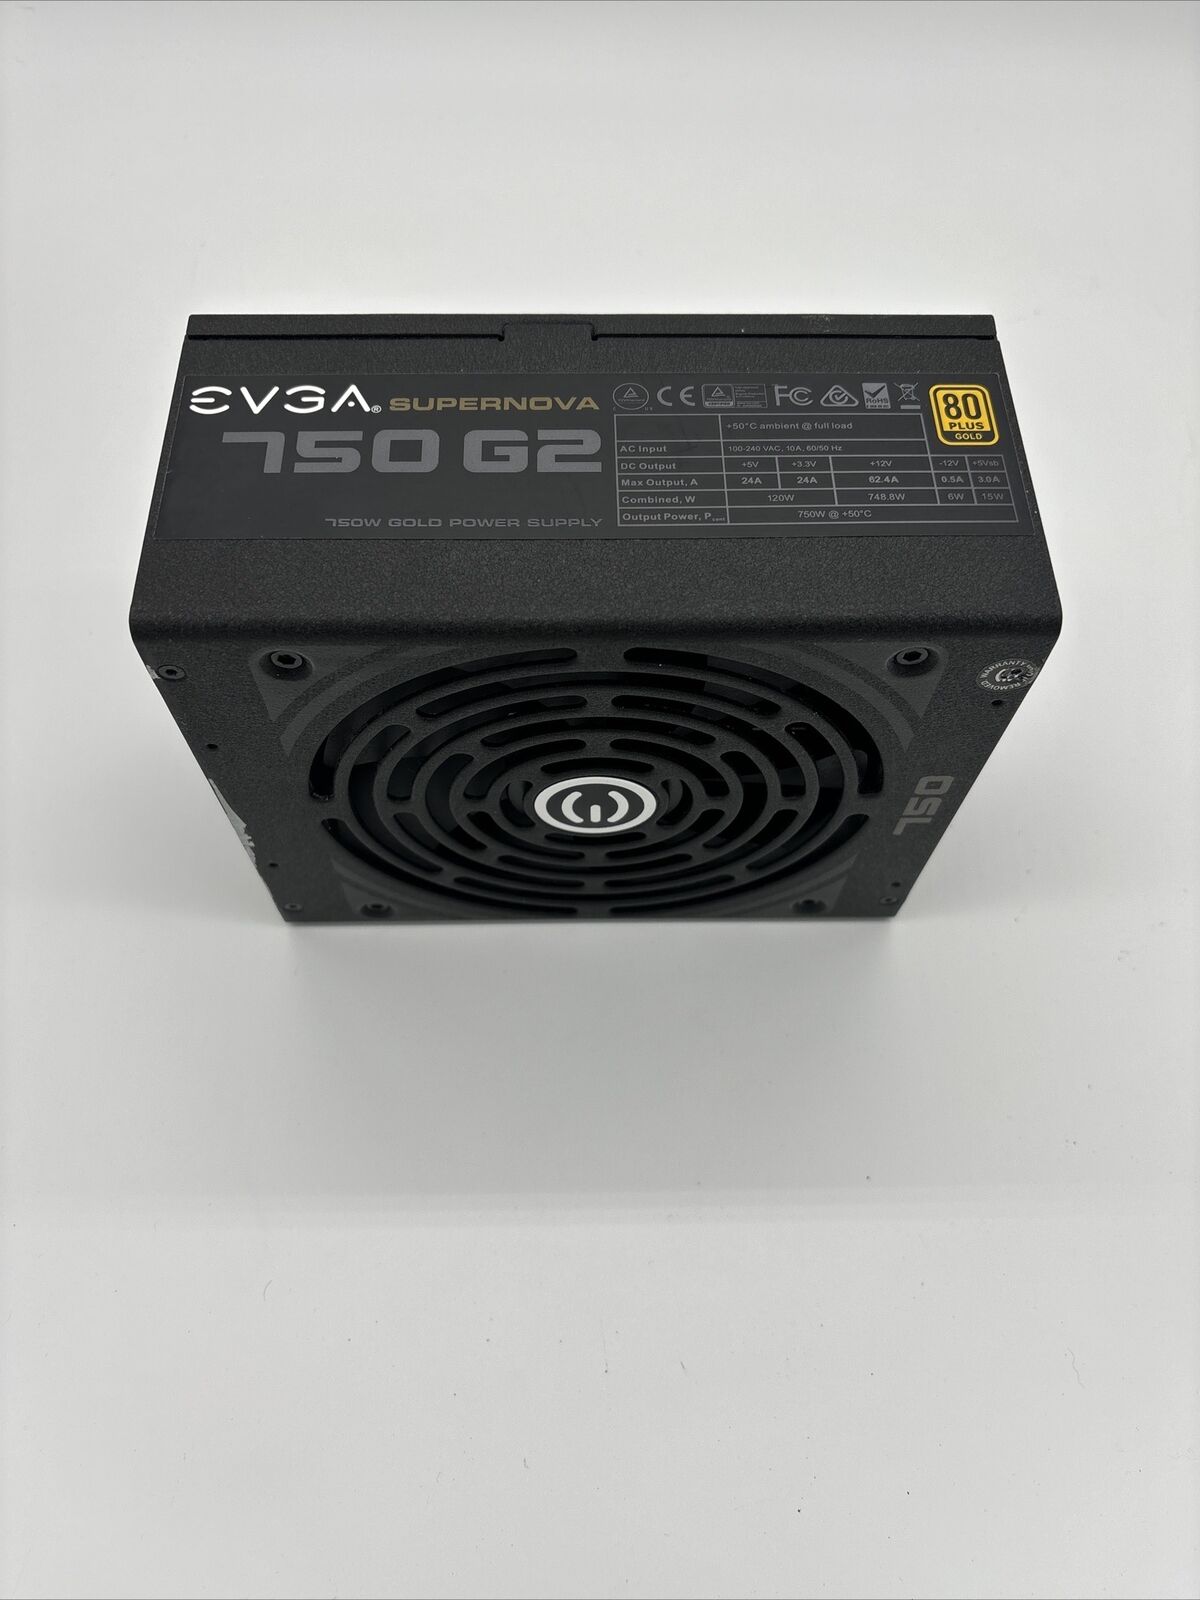 EVGA Supernova 750 W G2 80 Gold Certified Modular ATX Power Supply CPU12V failed